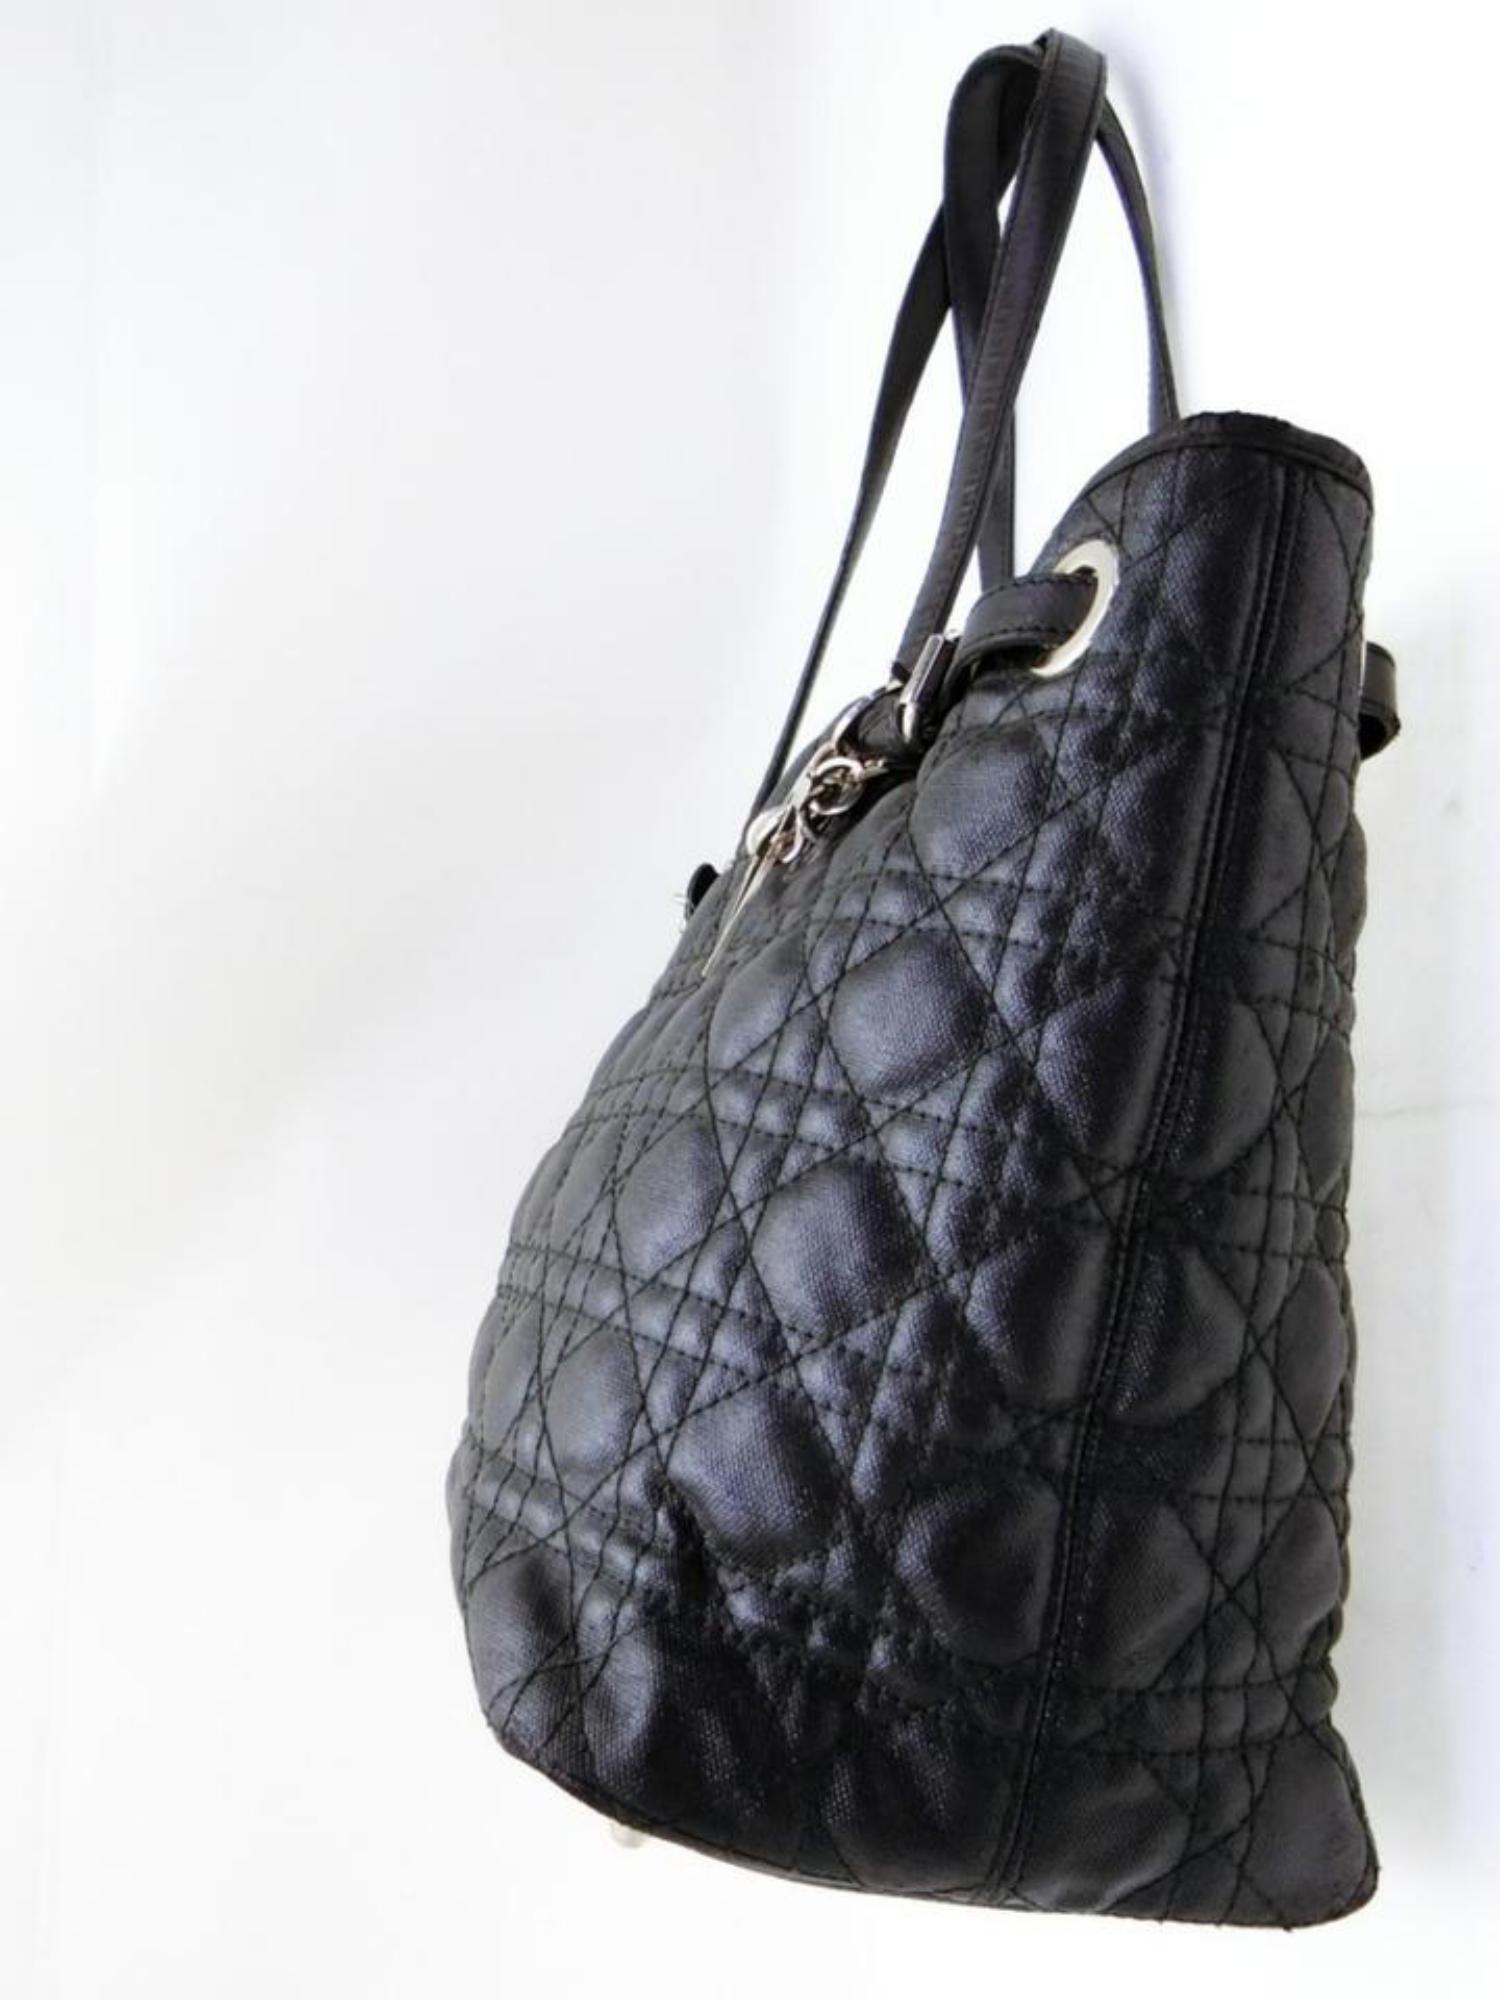 Dior Quilted Leather Cannage Shopper Tote 233793 Black Canvas Shoulder Bag For Sale 1